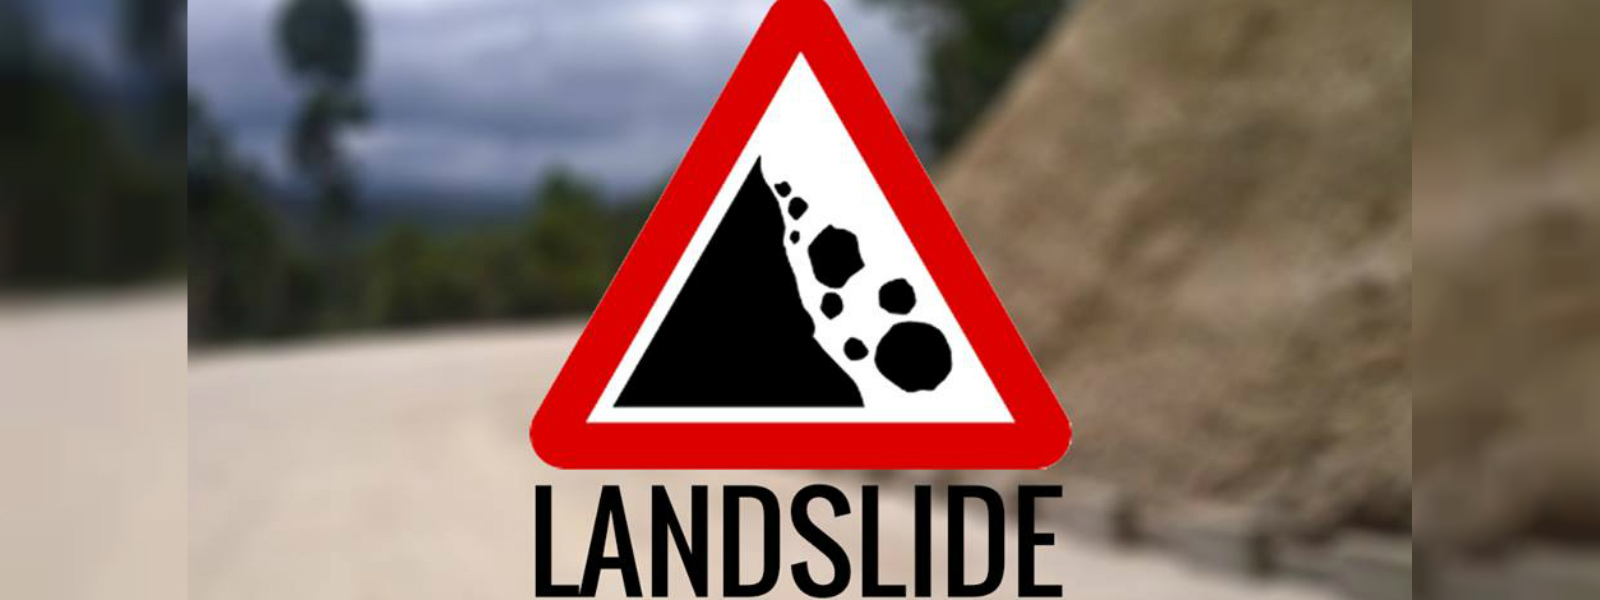 Landslide warning in effect for 4 districts